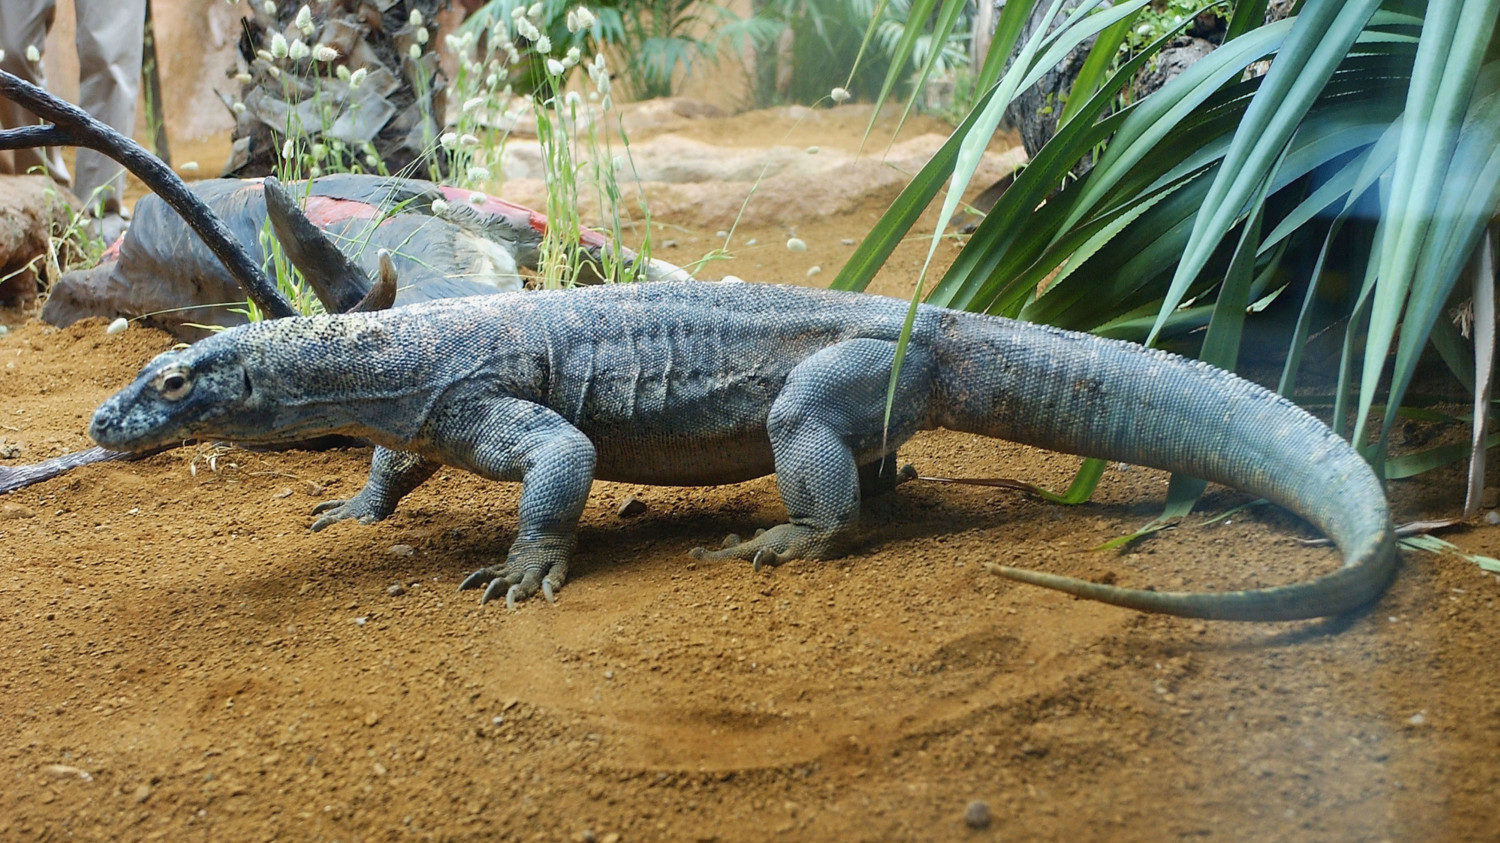 GBR: Komodo Dragons Arrive At London Zoo